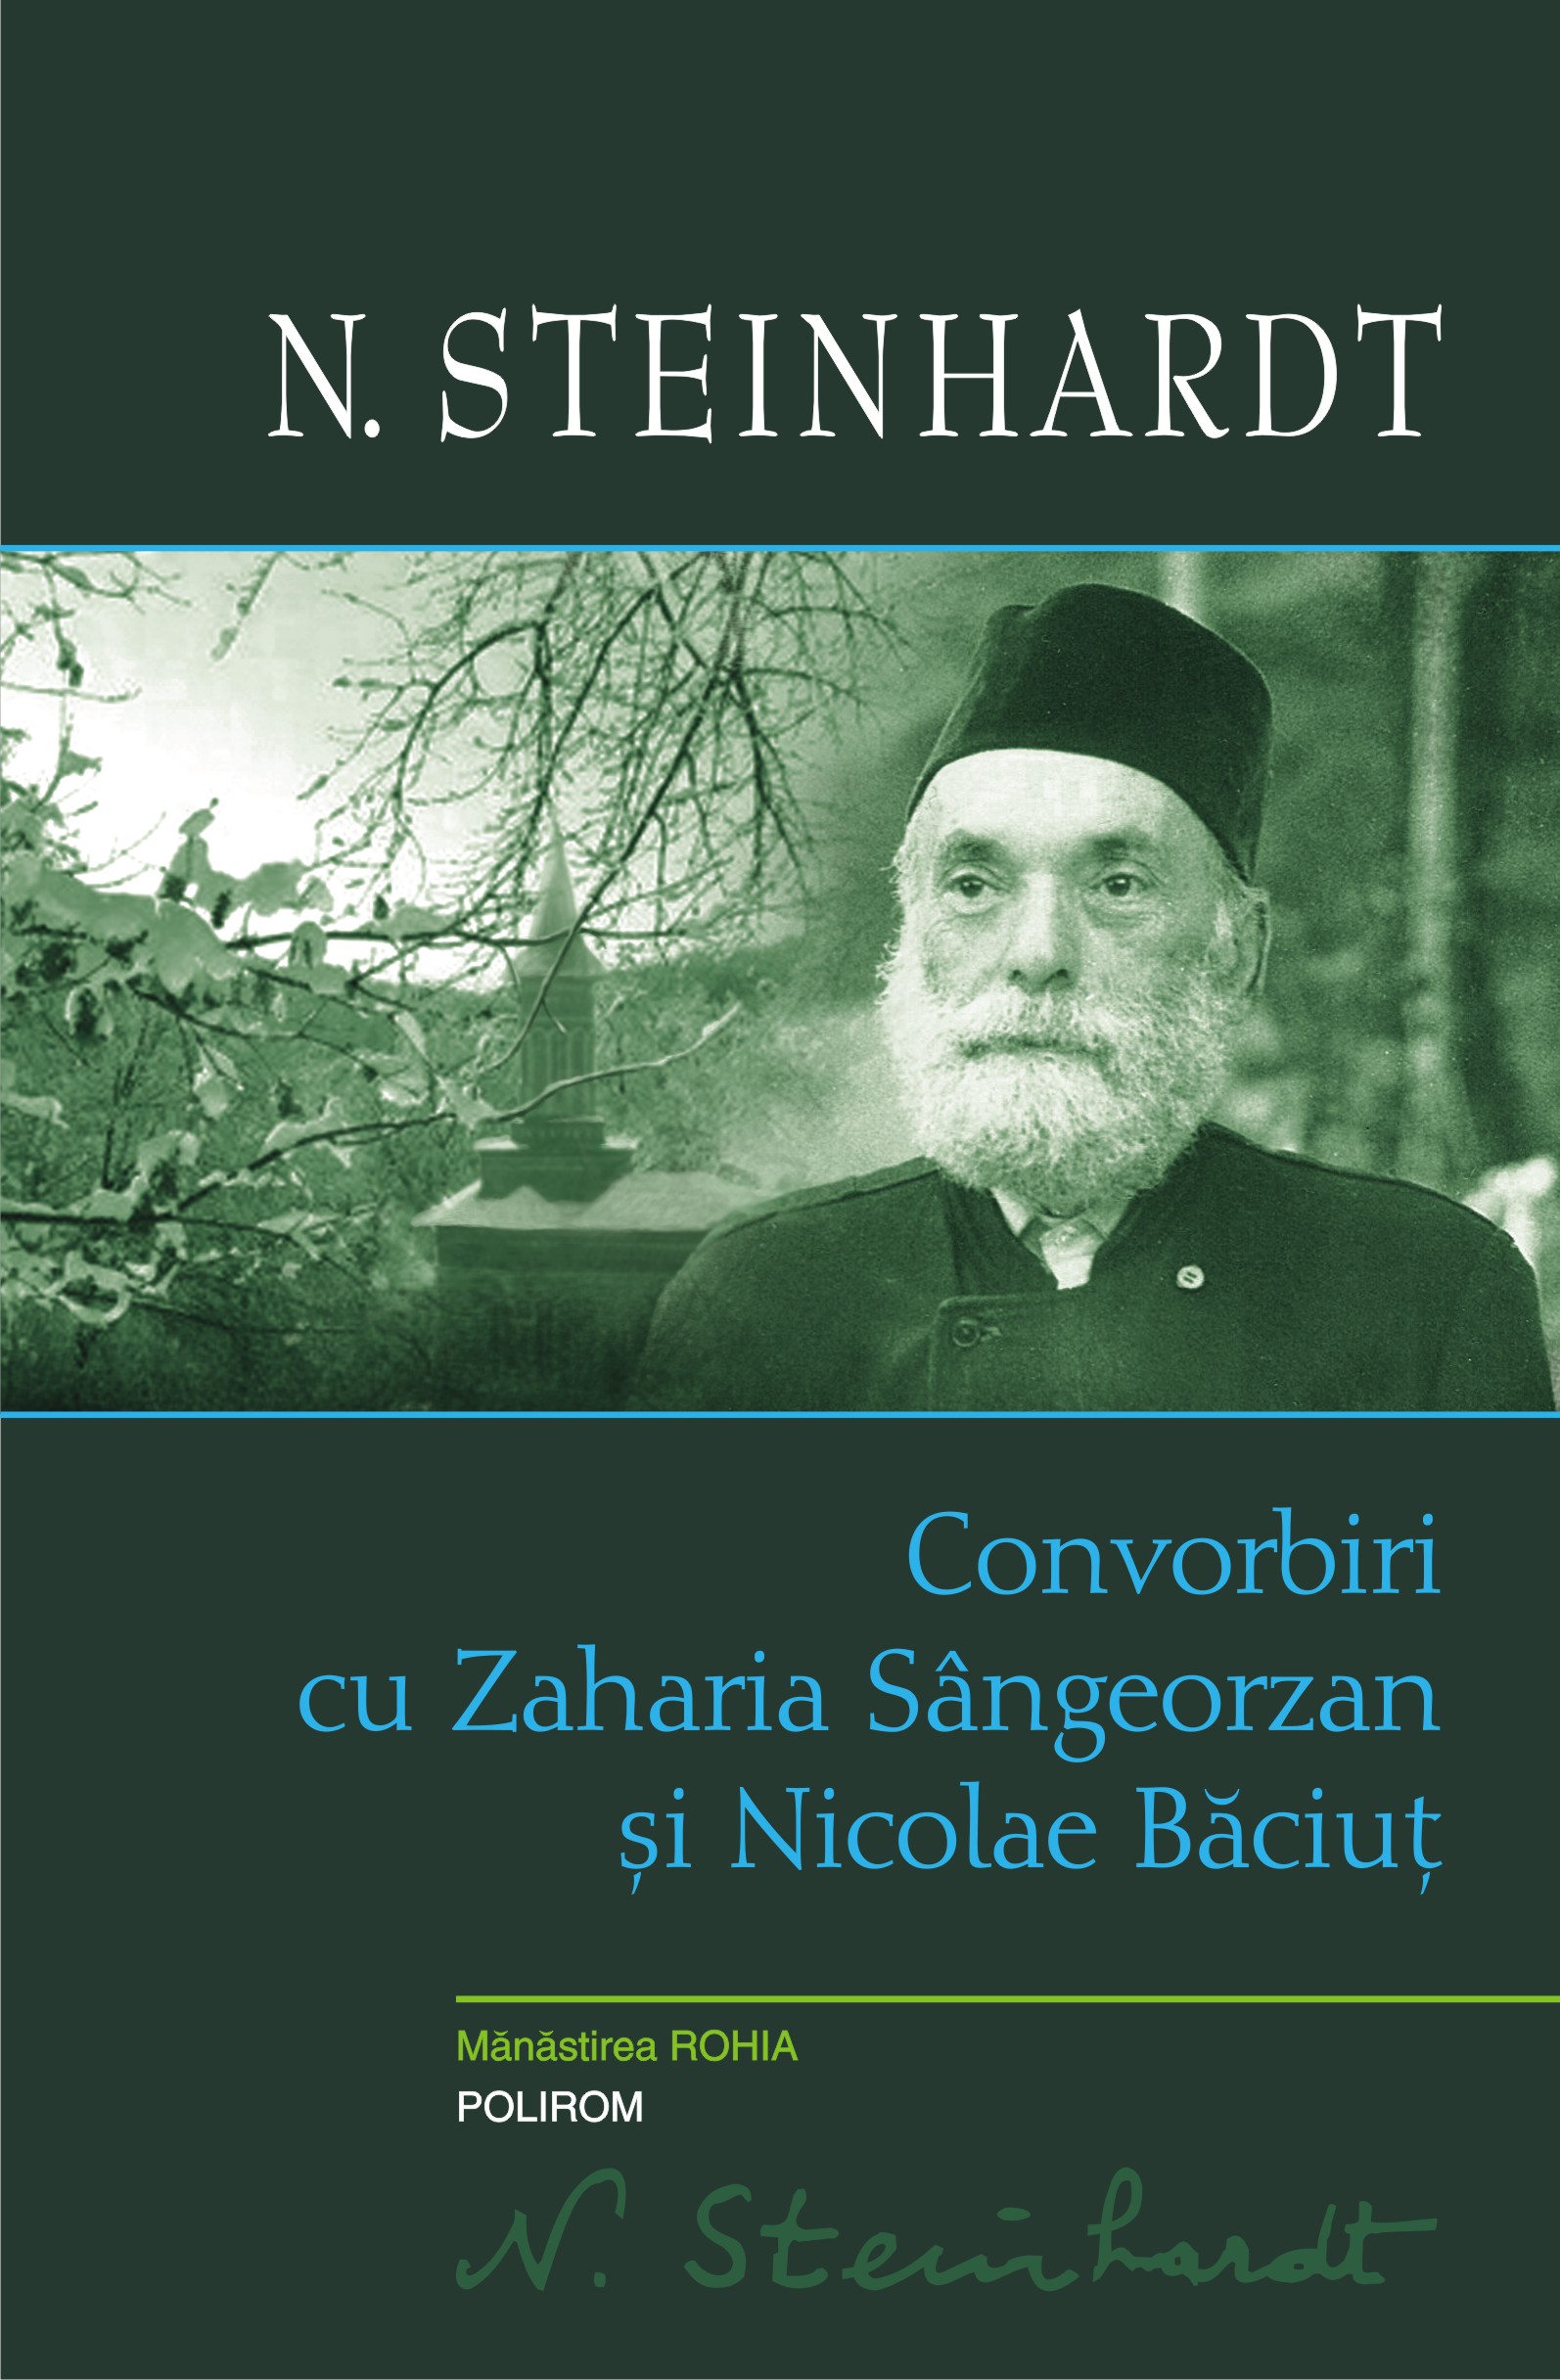 eBook Convorbiri cu Zaharia Sangeorzan si Nicolae Baciut - N. Steinhardt